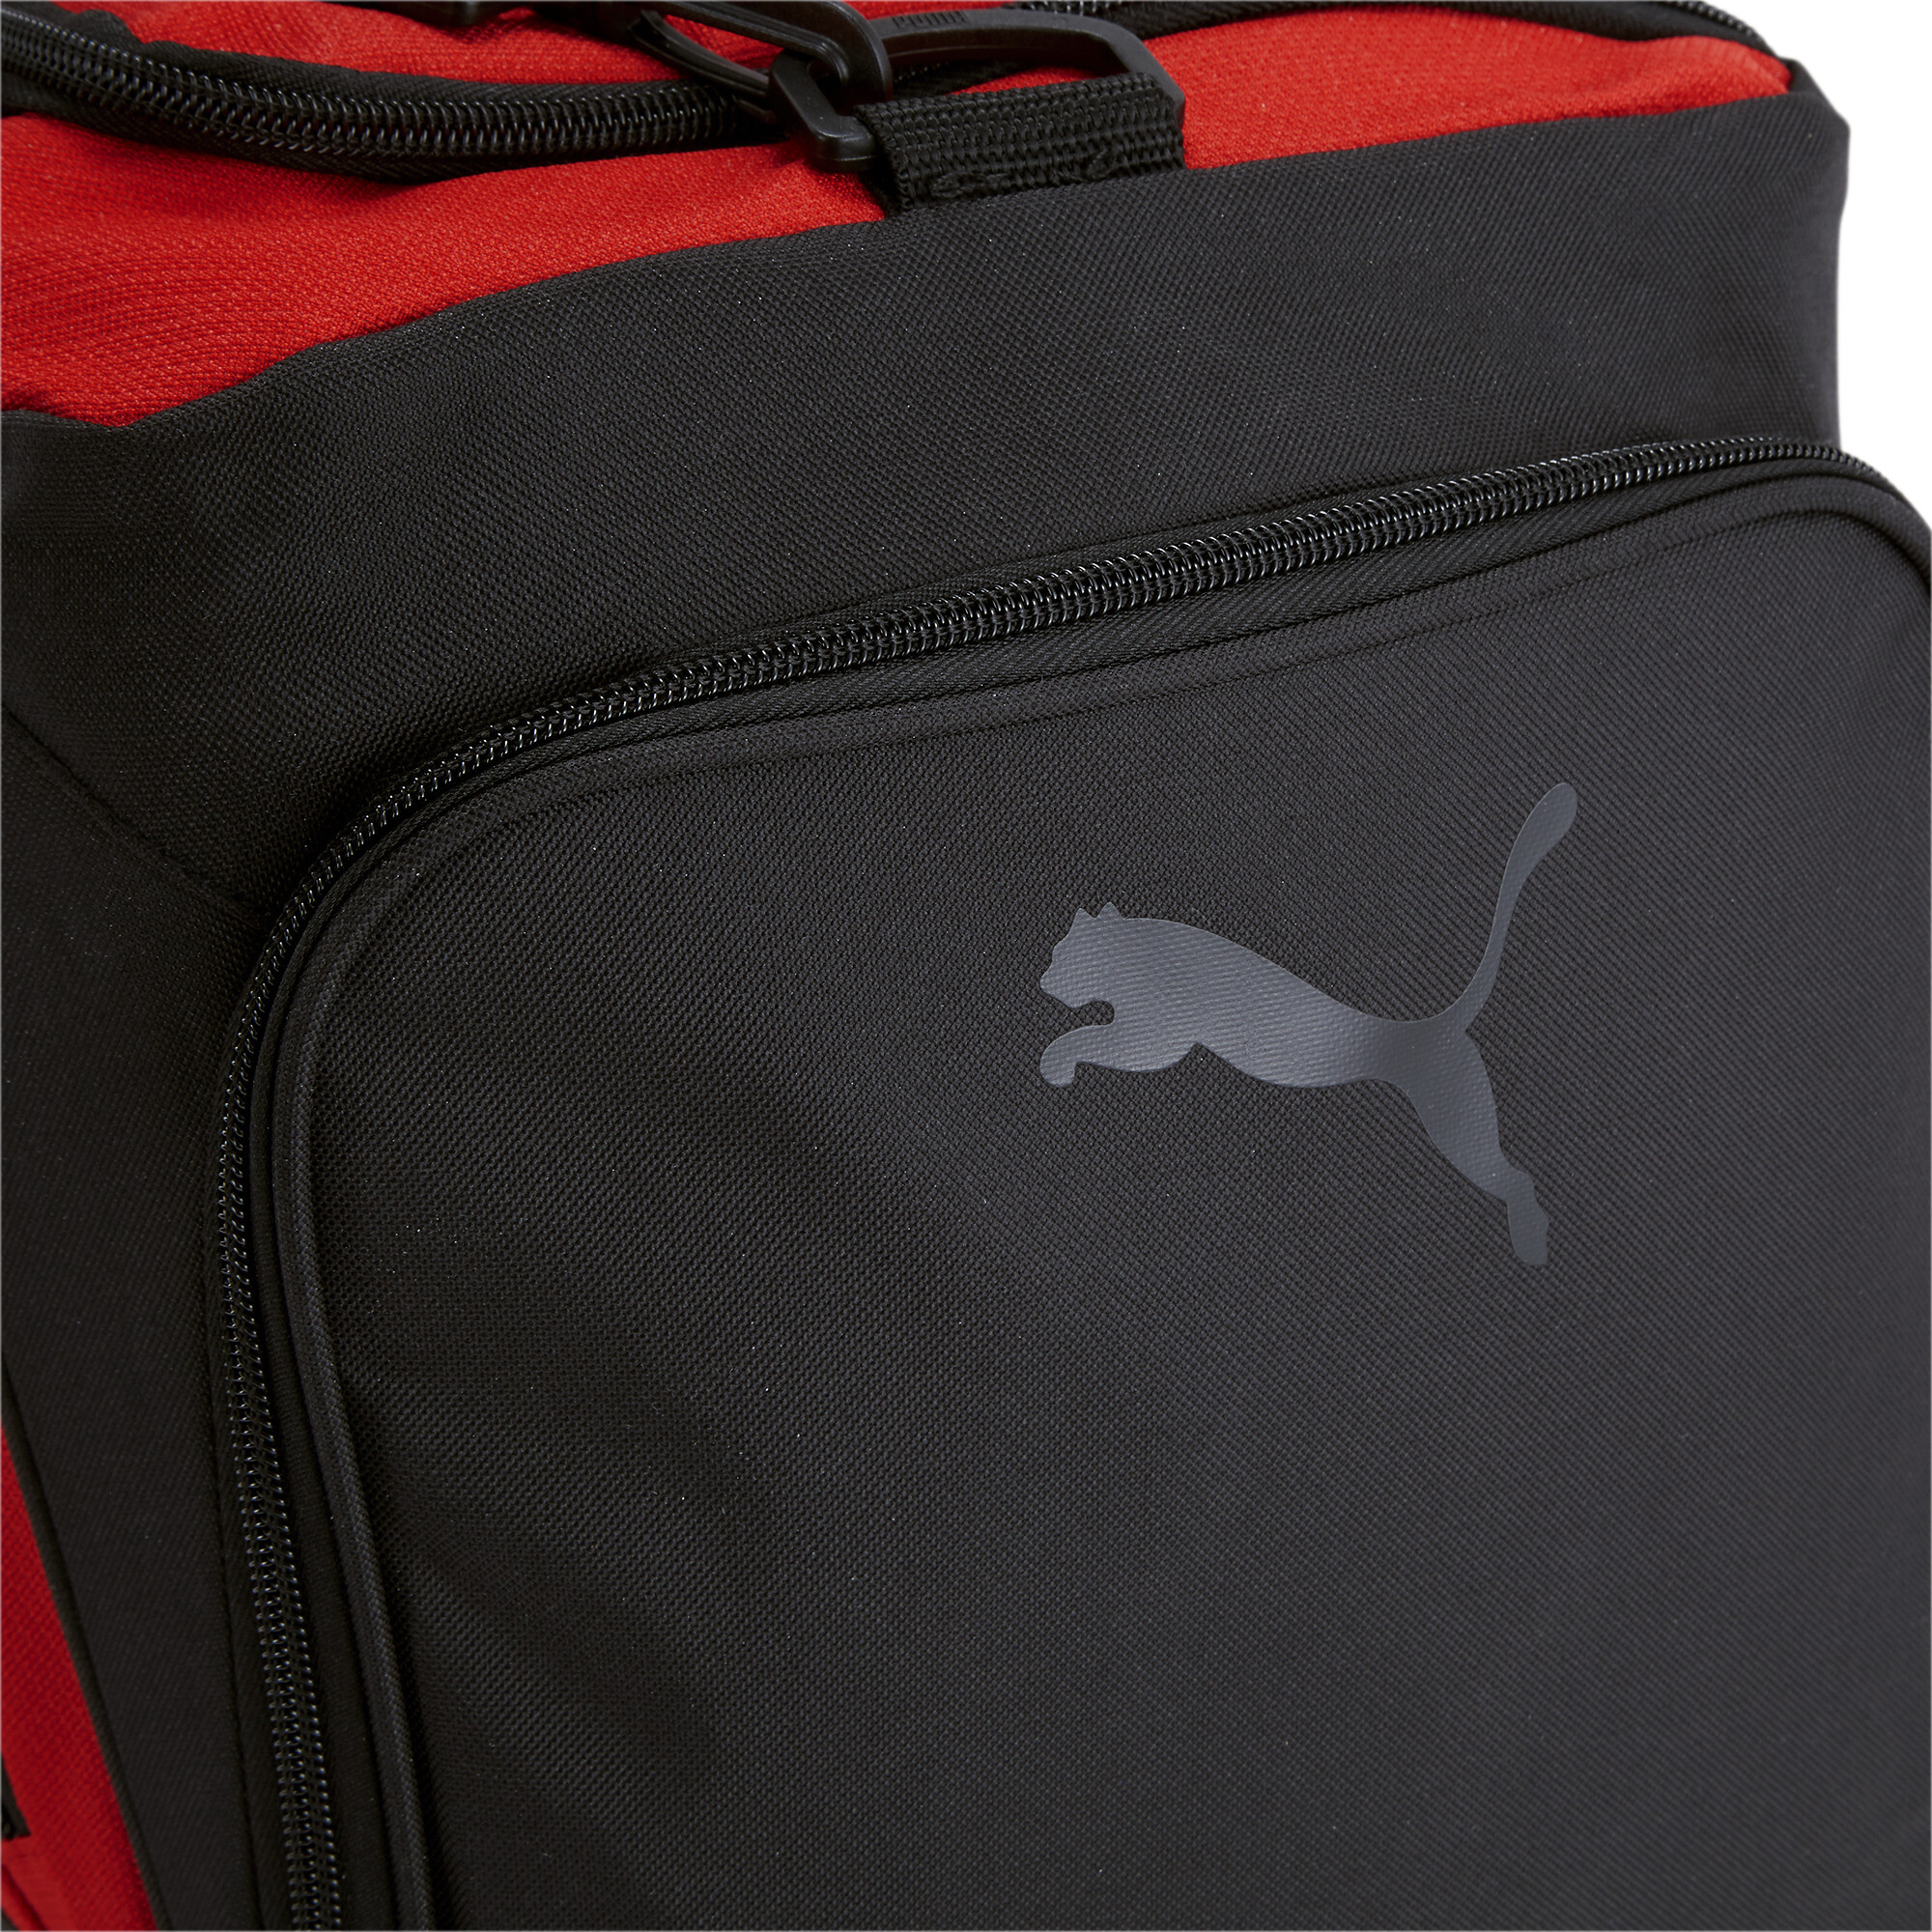 Puma Accelerator Duffel Bag, Black